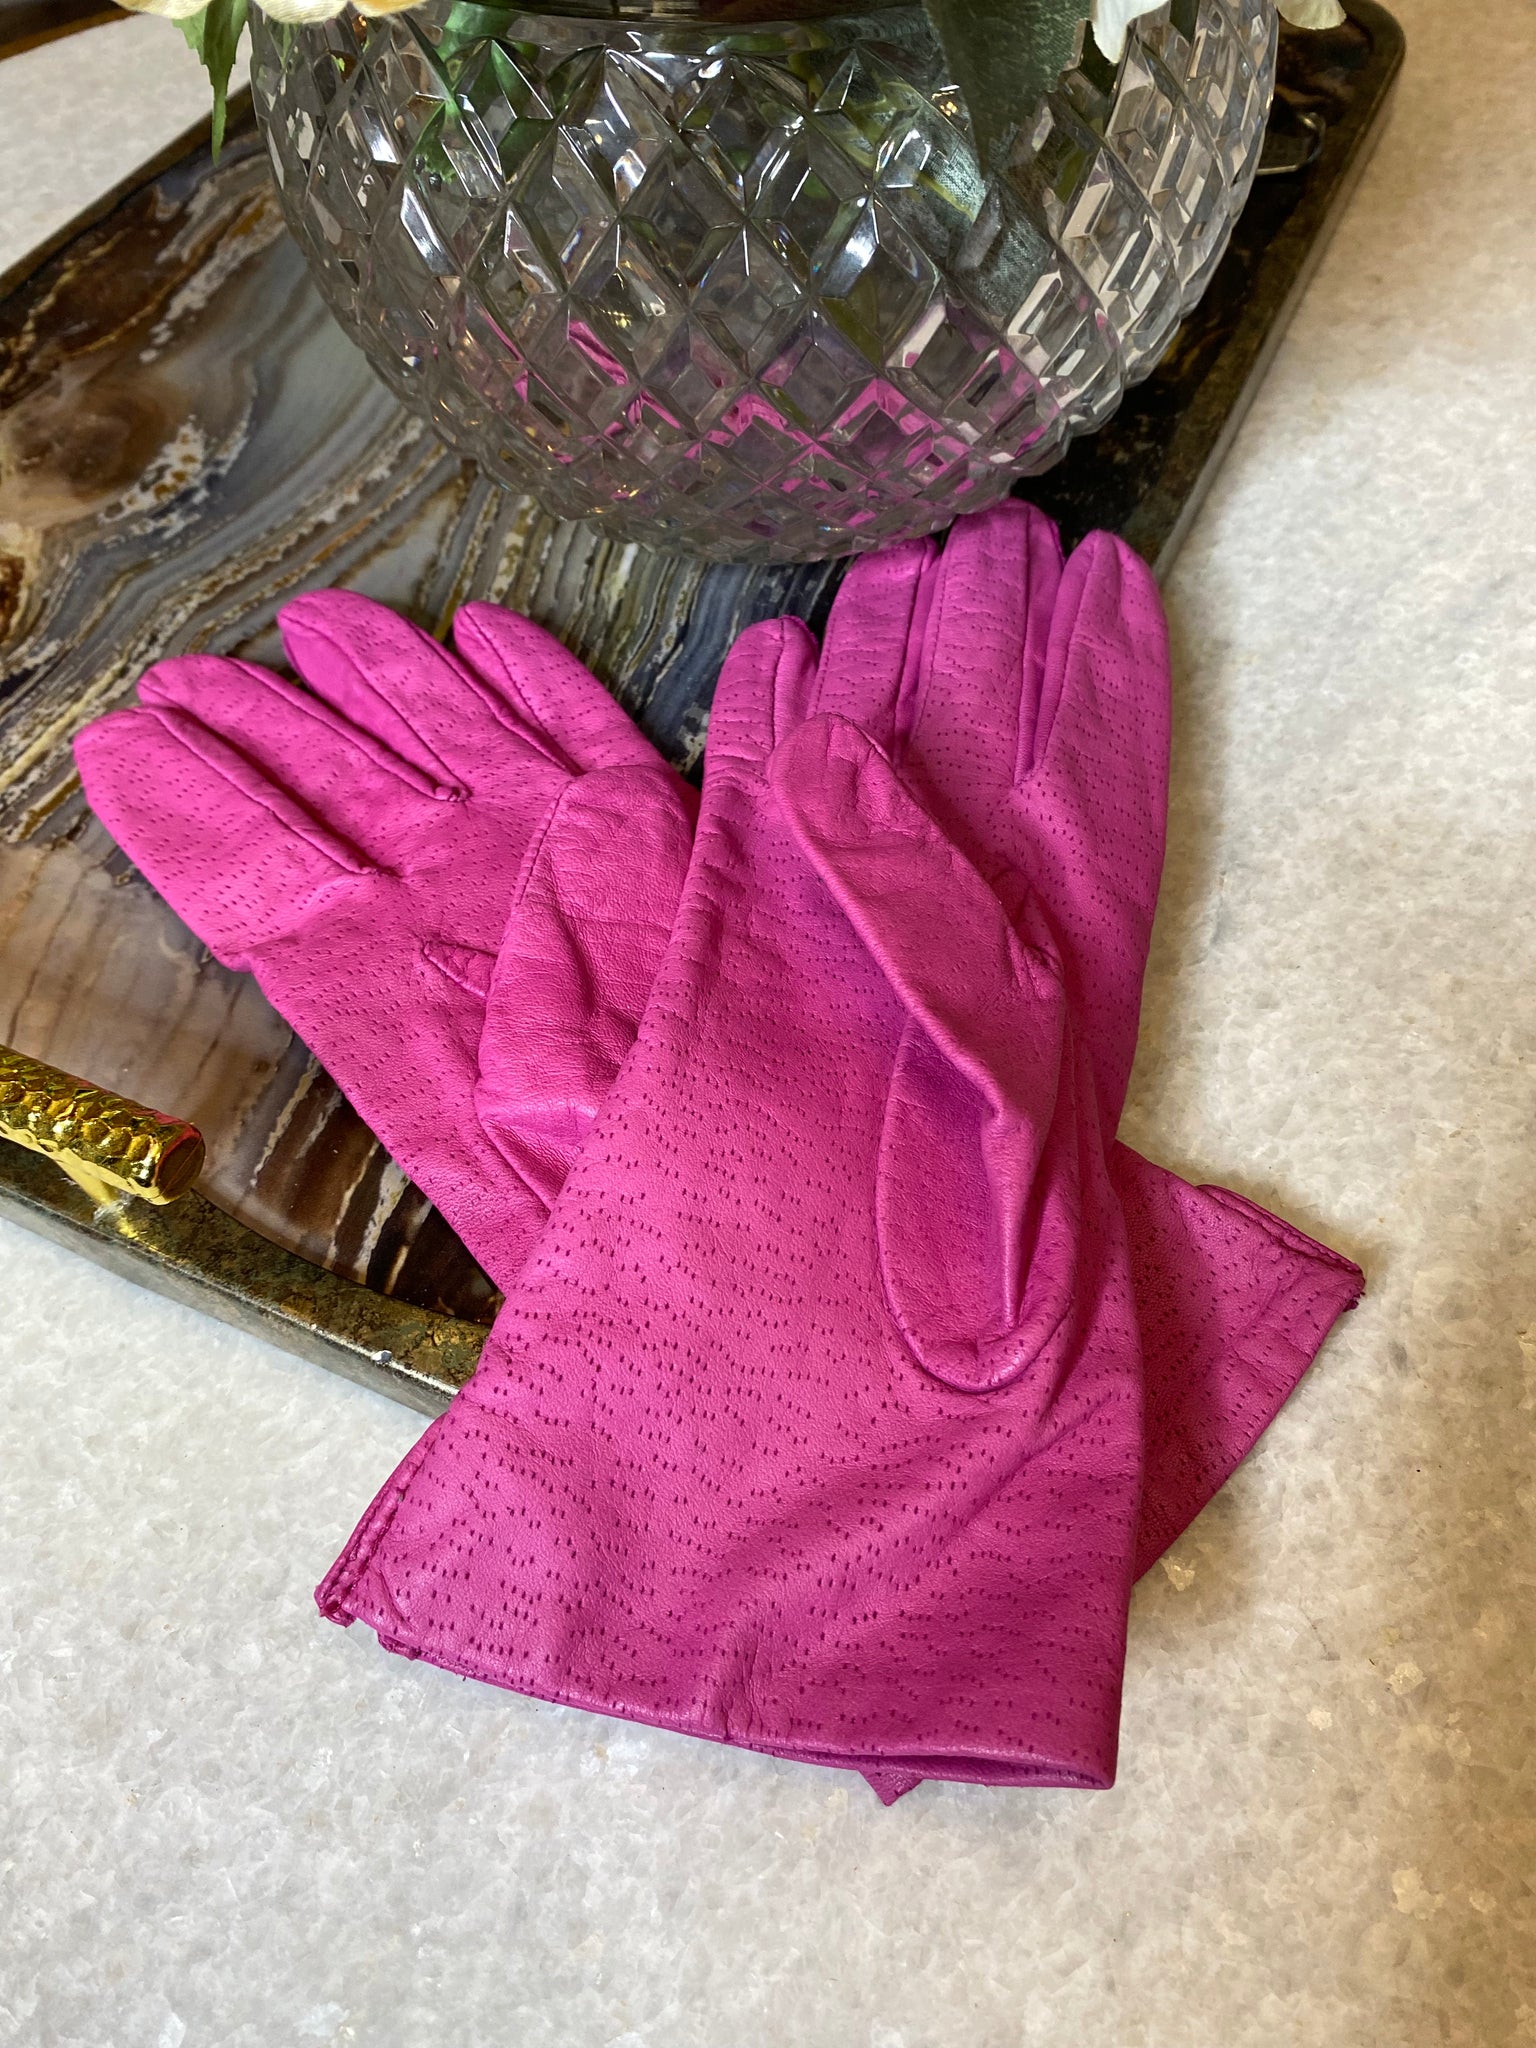 pink laser cut leather gloves